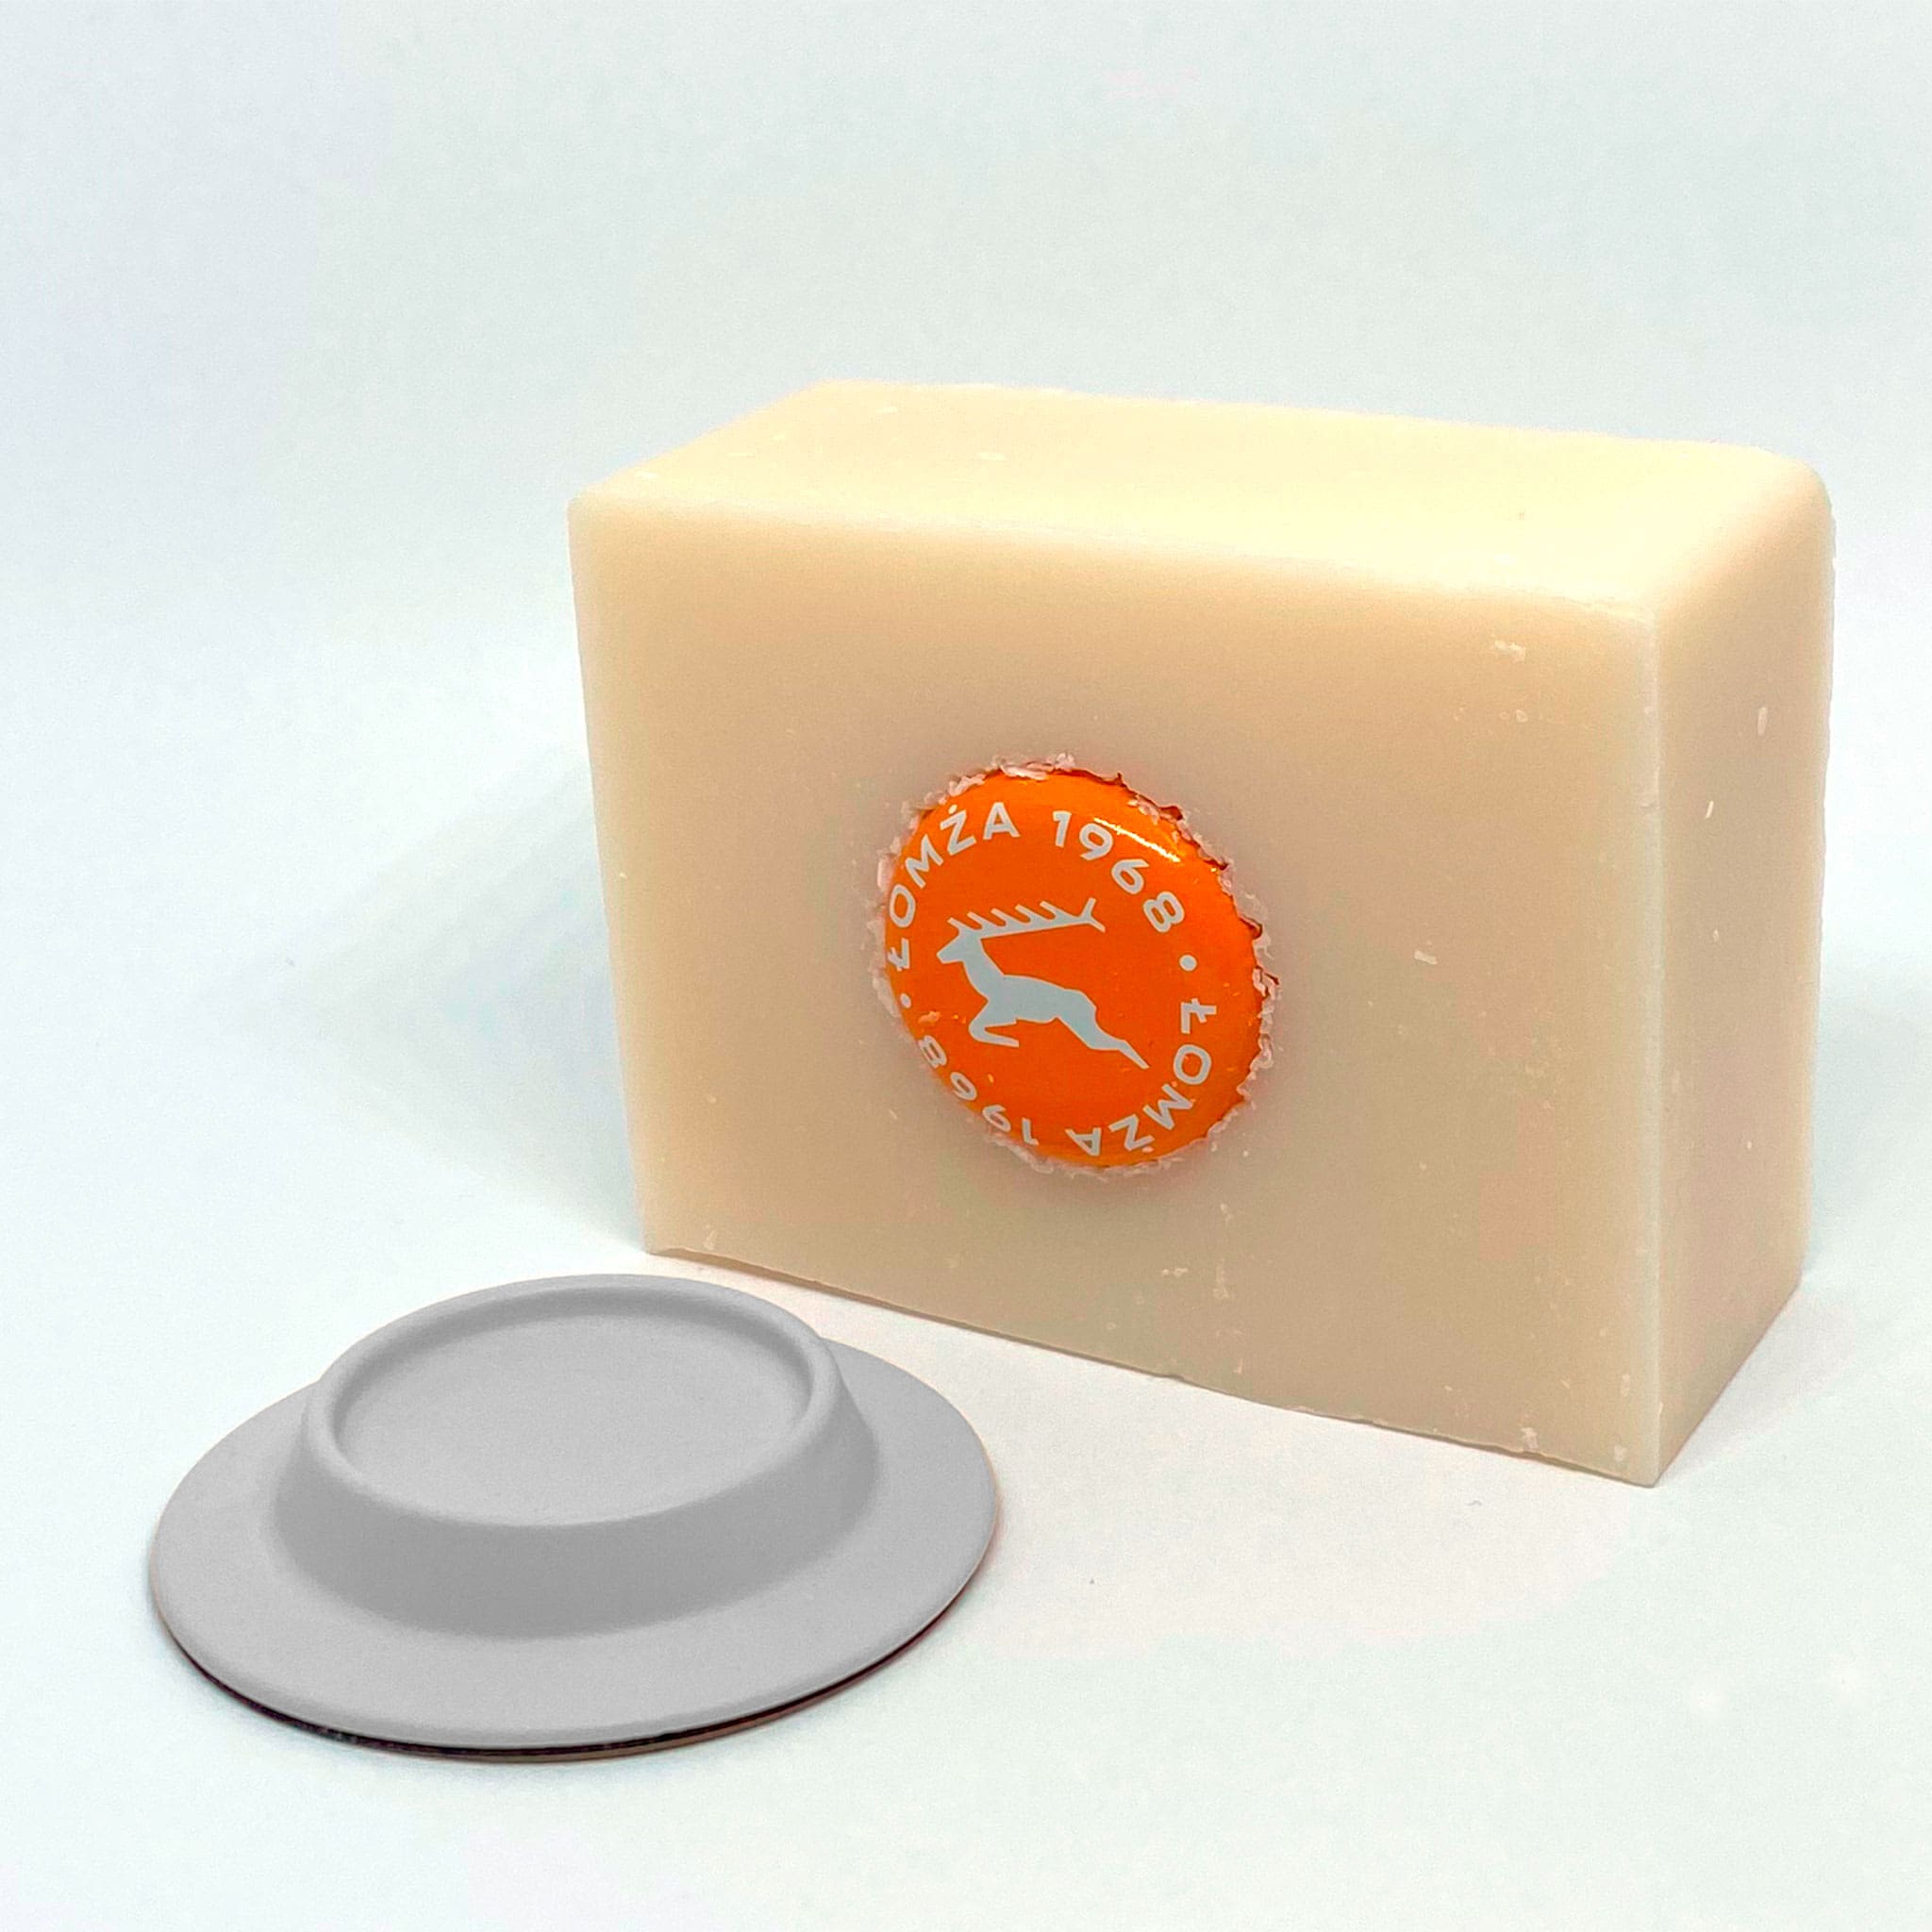 Seifenhalter soapi "Grau" mit Magnet – Ø 5 cm